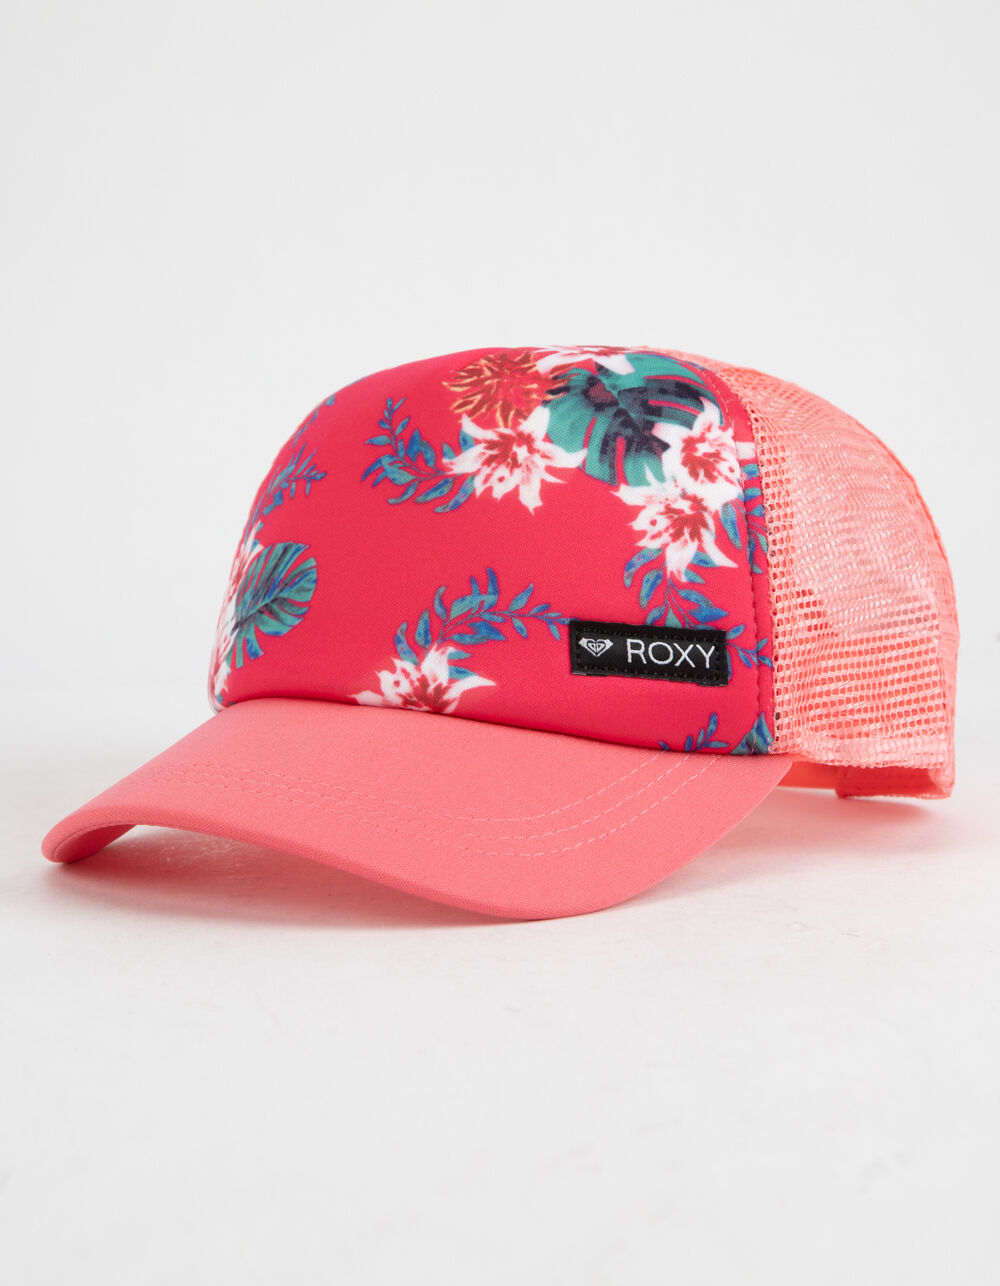 ROXY Just OK Brush Pink Girls Trucker Hat image number 0